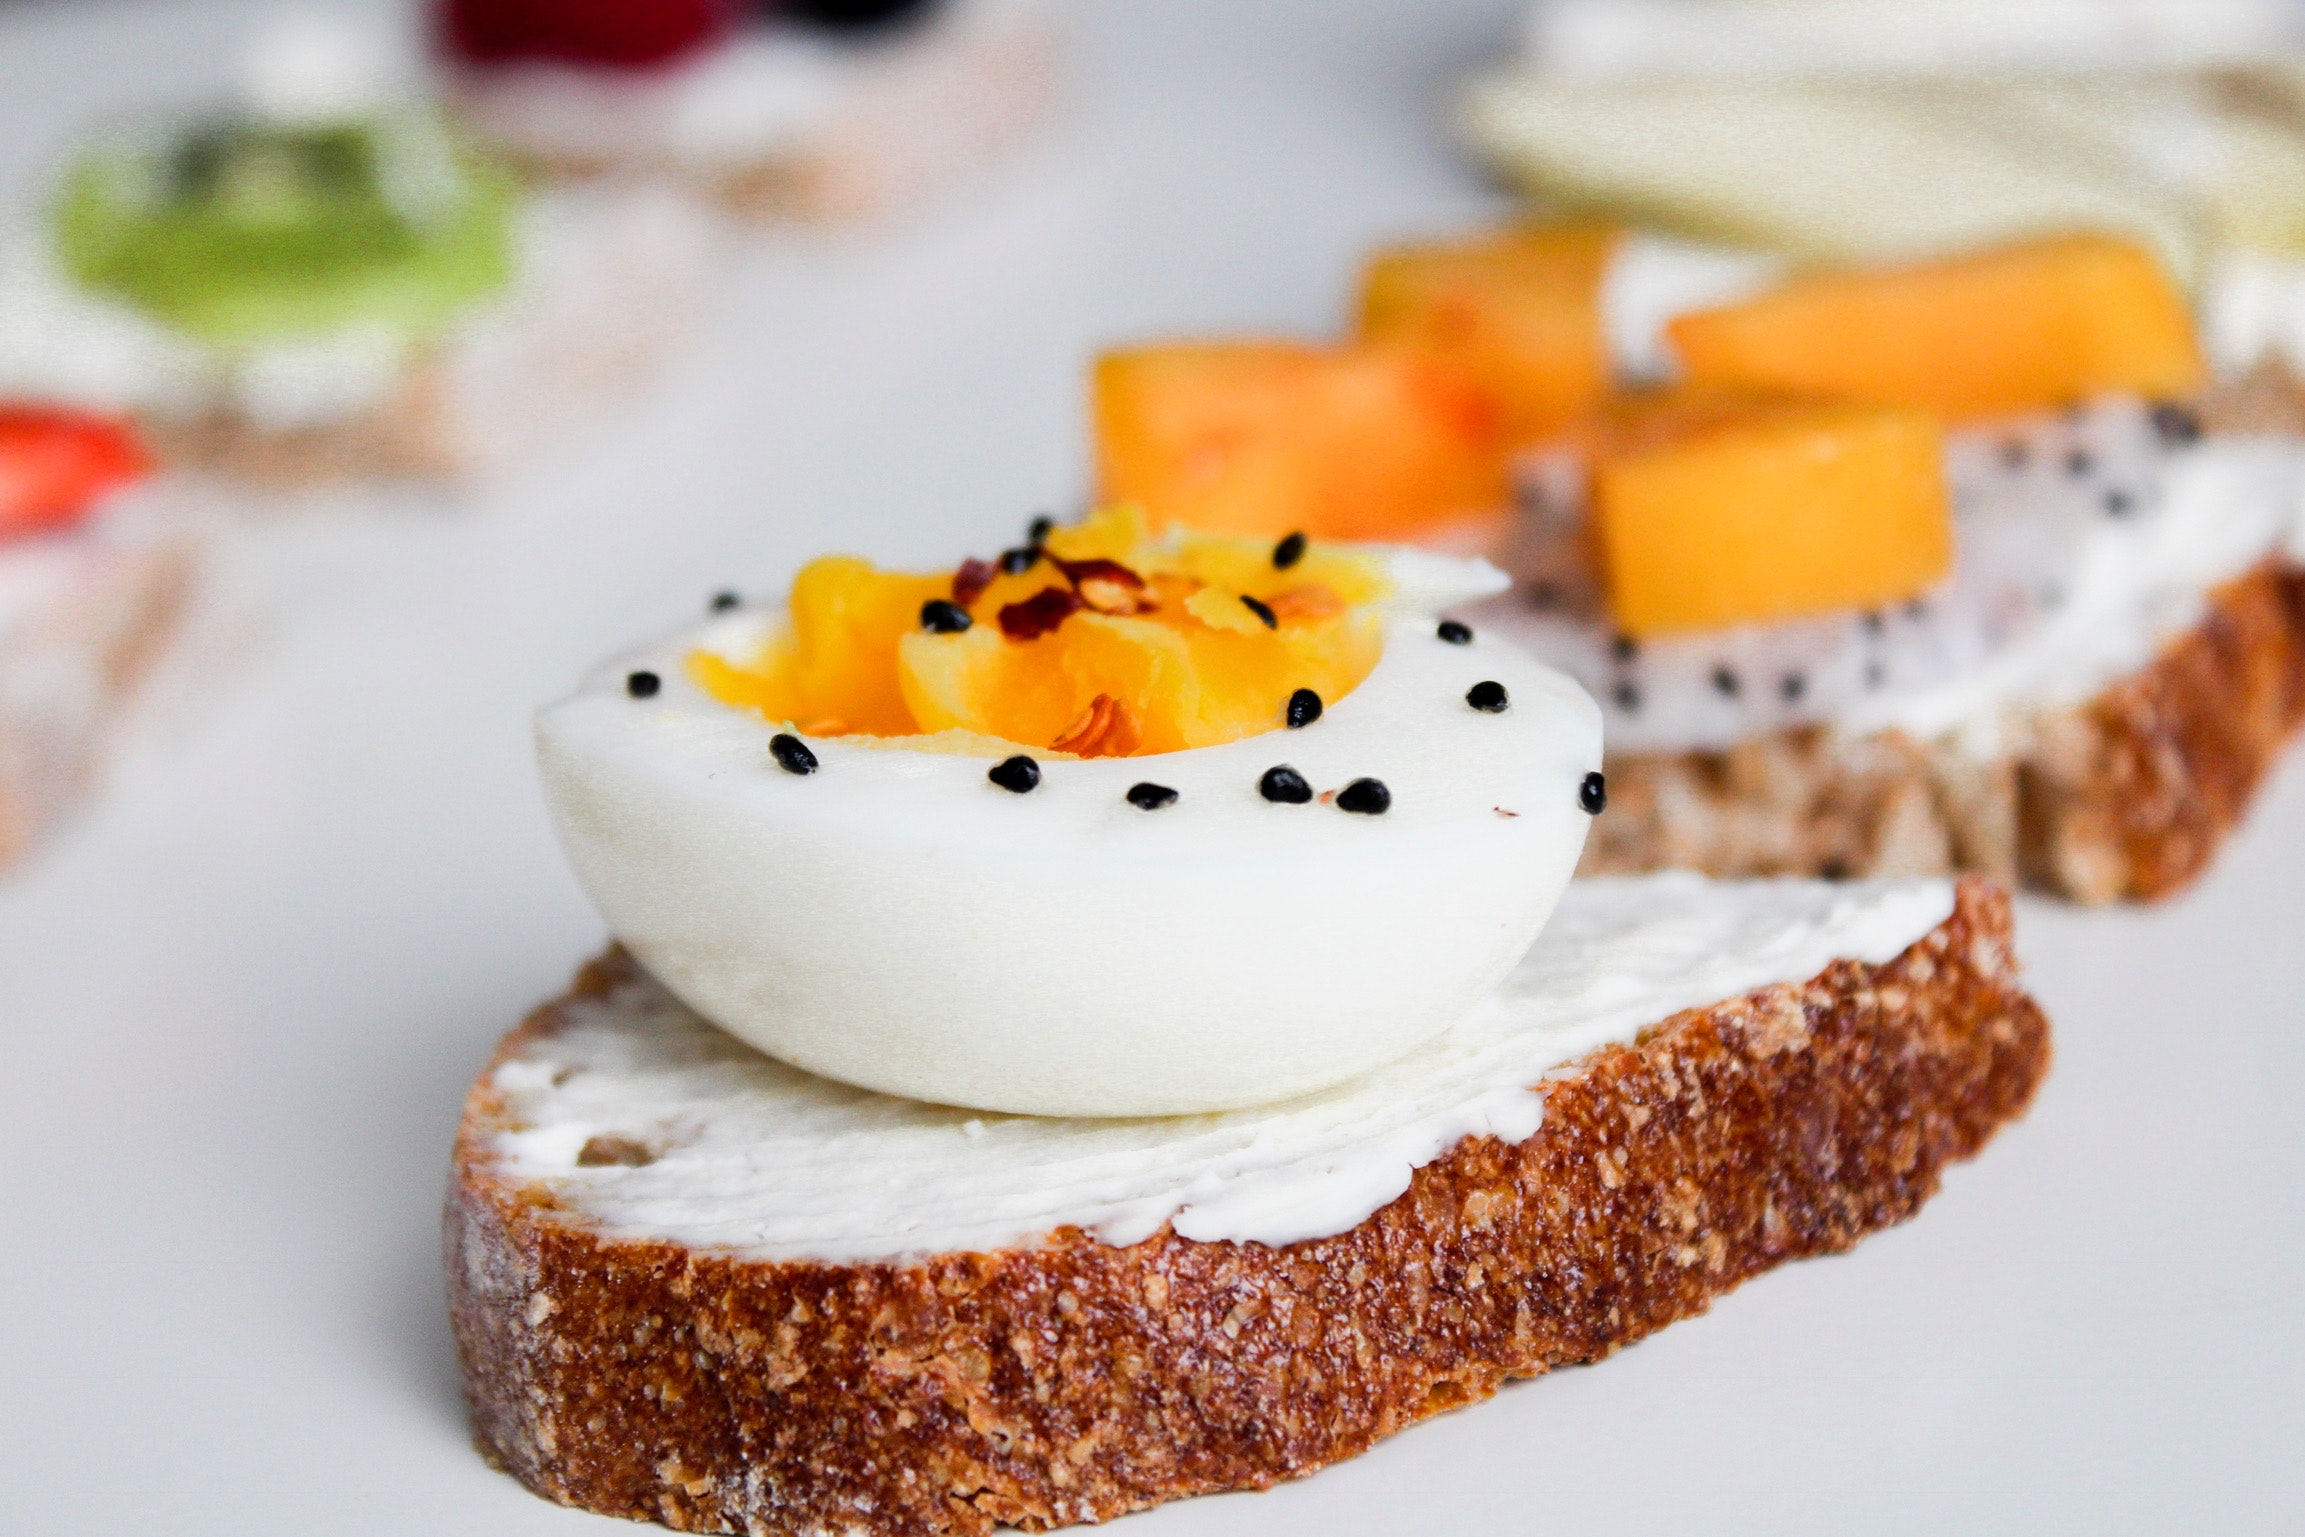 Boiled egg with seasonings photo